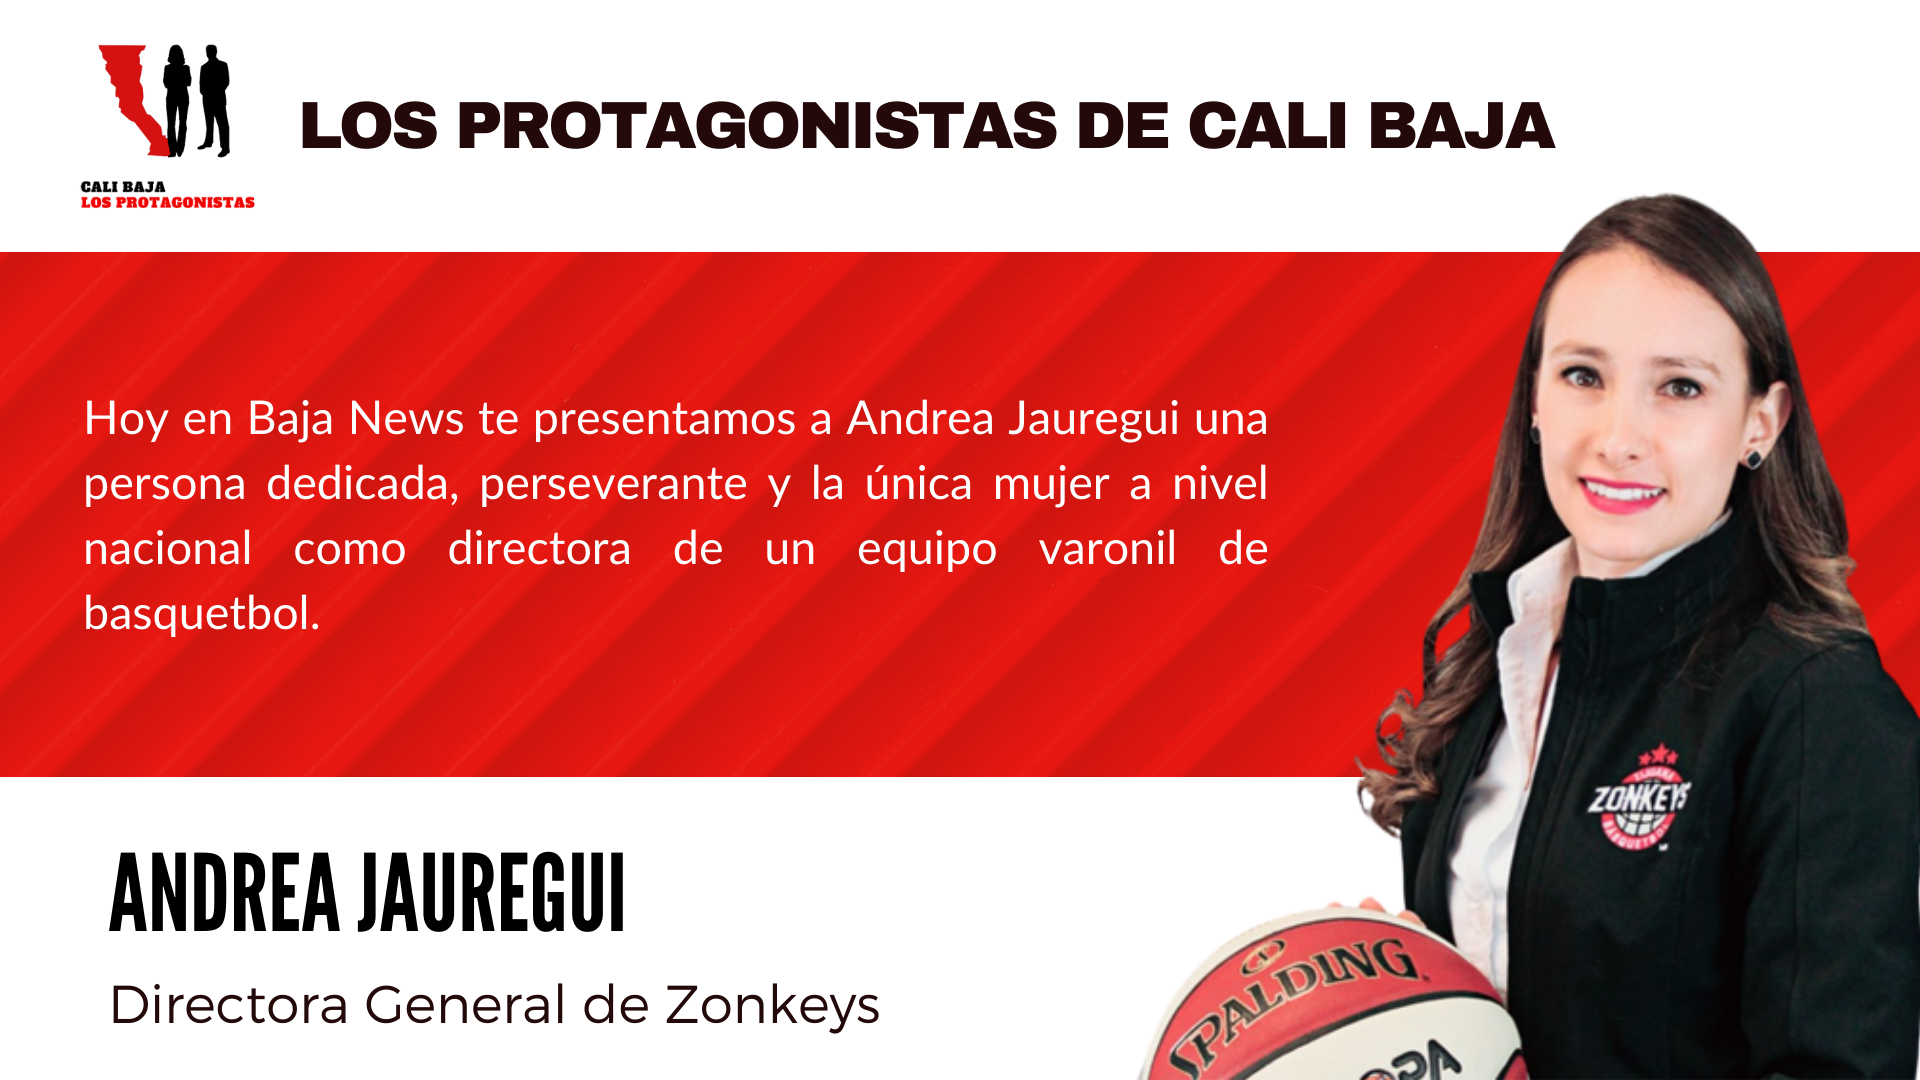 Andrea Jauregui, Directora General de Zonkeys en Los Protagonistas IFOTO: Baja News